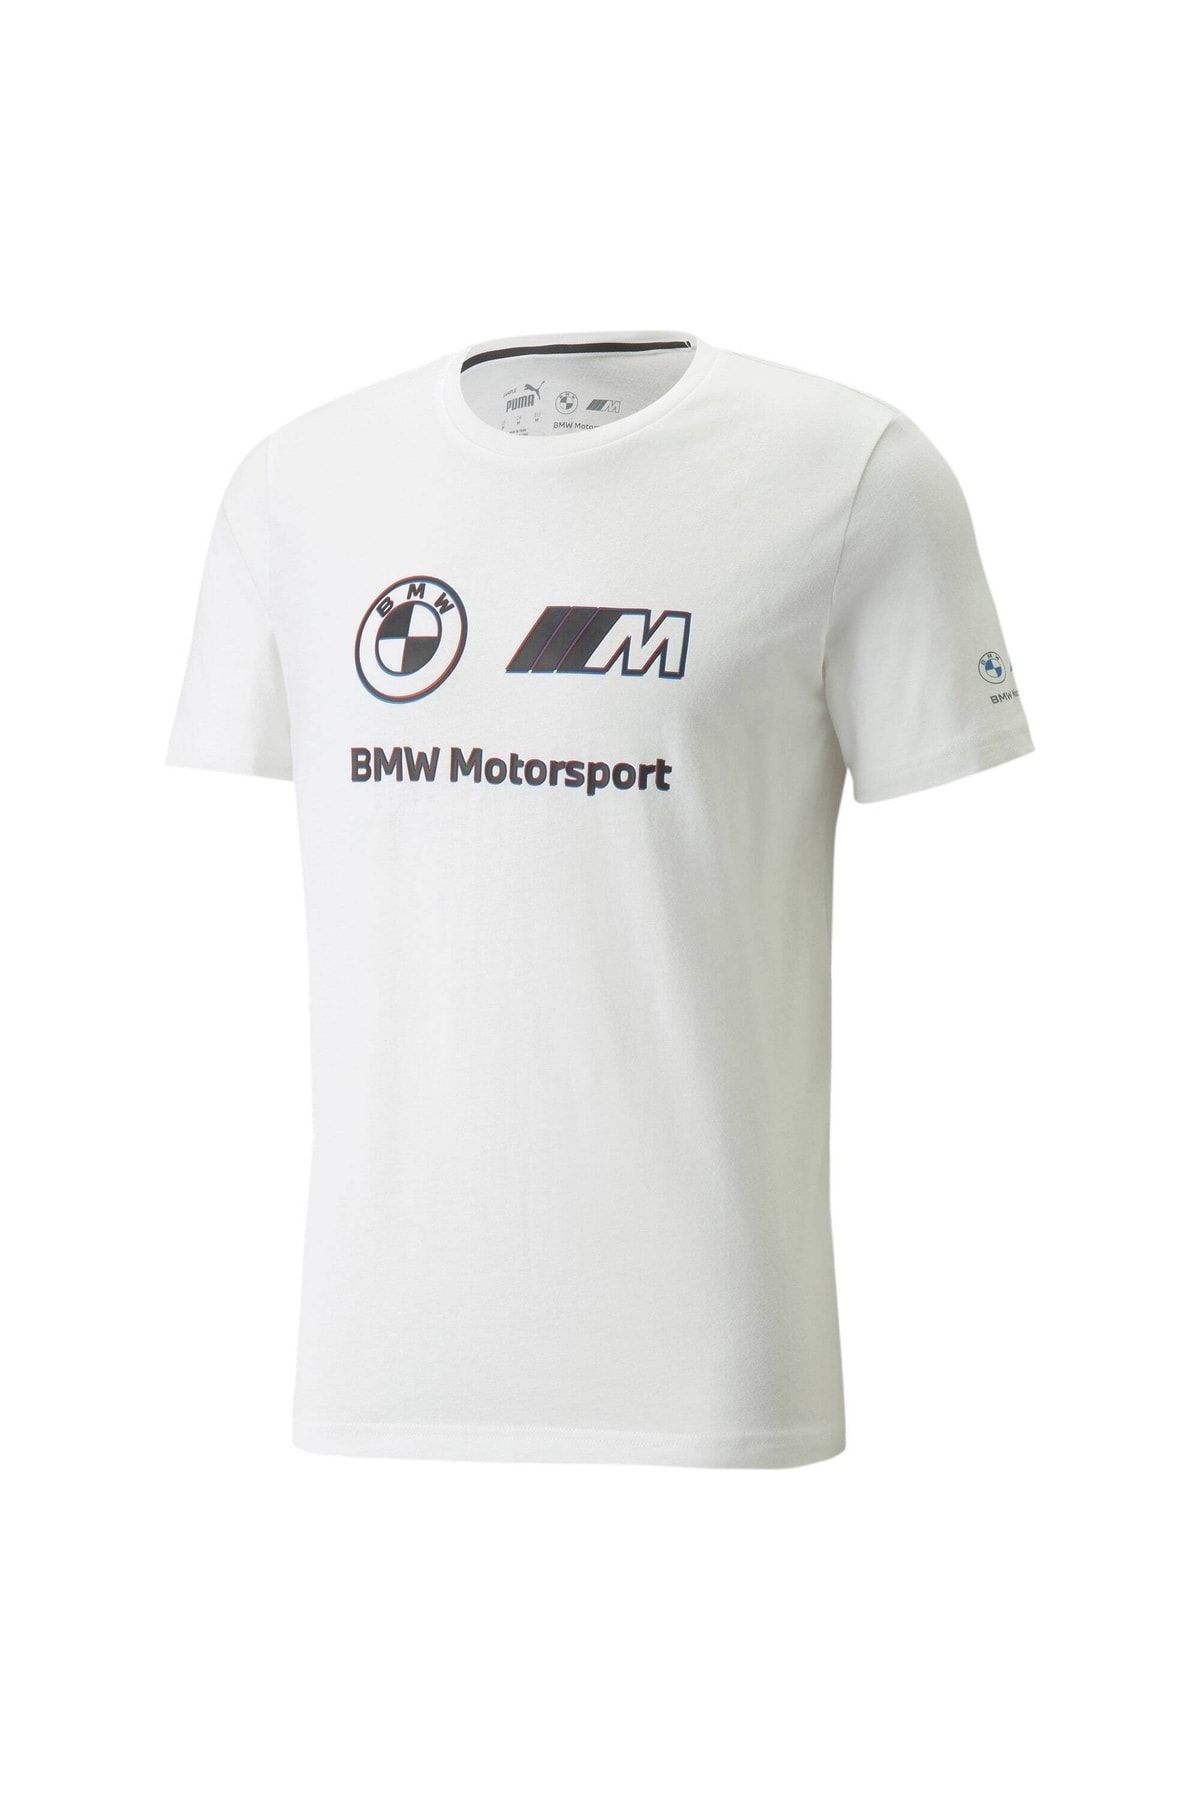 Puma Bmw M Motorsport Logo Erkek Tişört